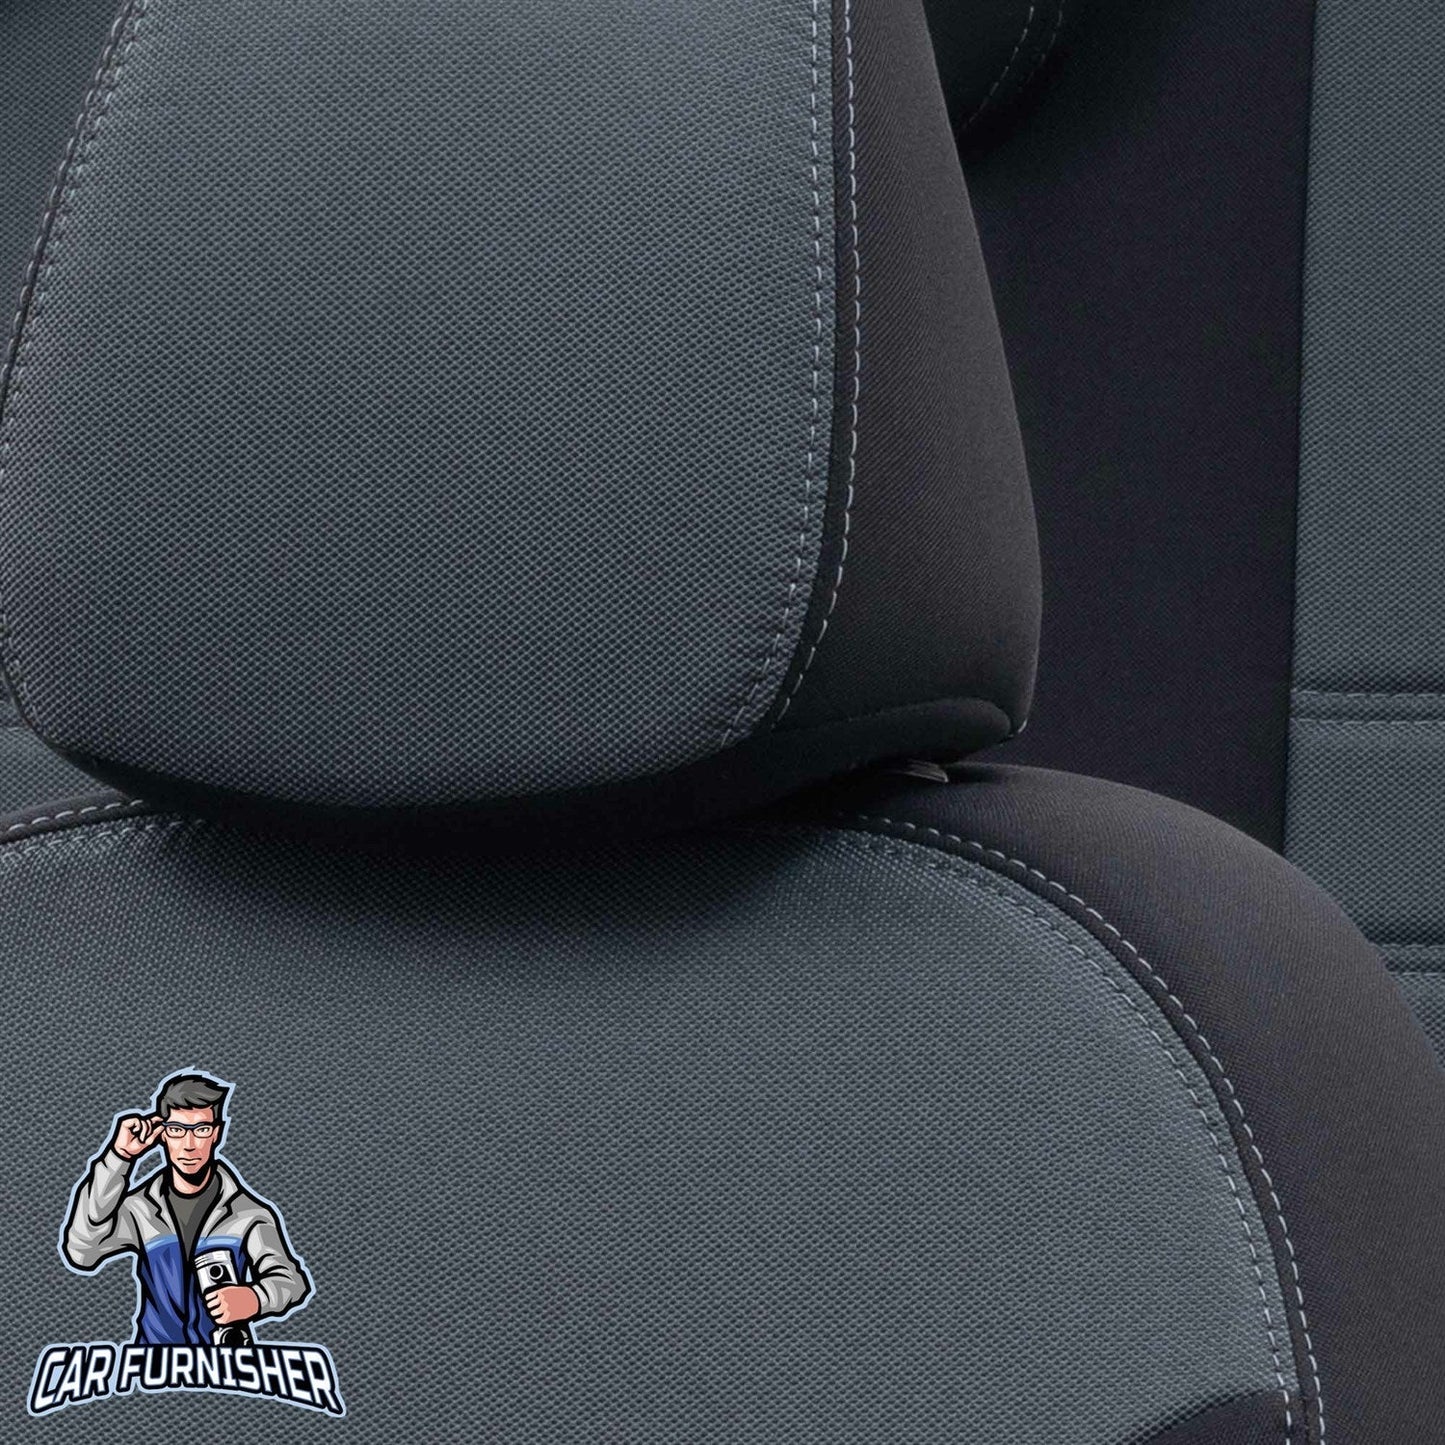 Peugeot Rifter Seat Covers Original Jacquard Design Smoked Black Jacquard Fabric